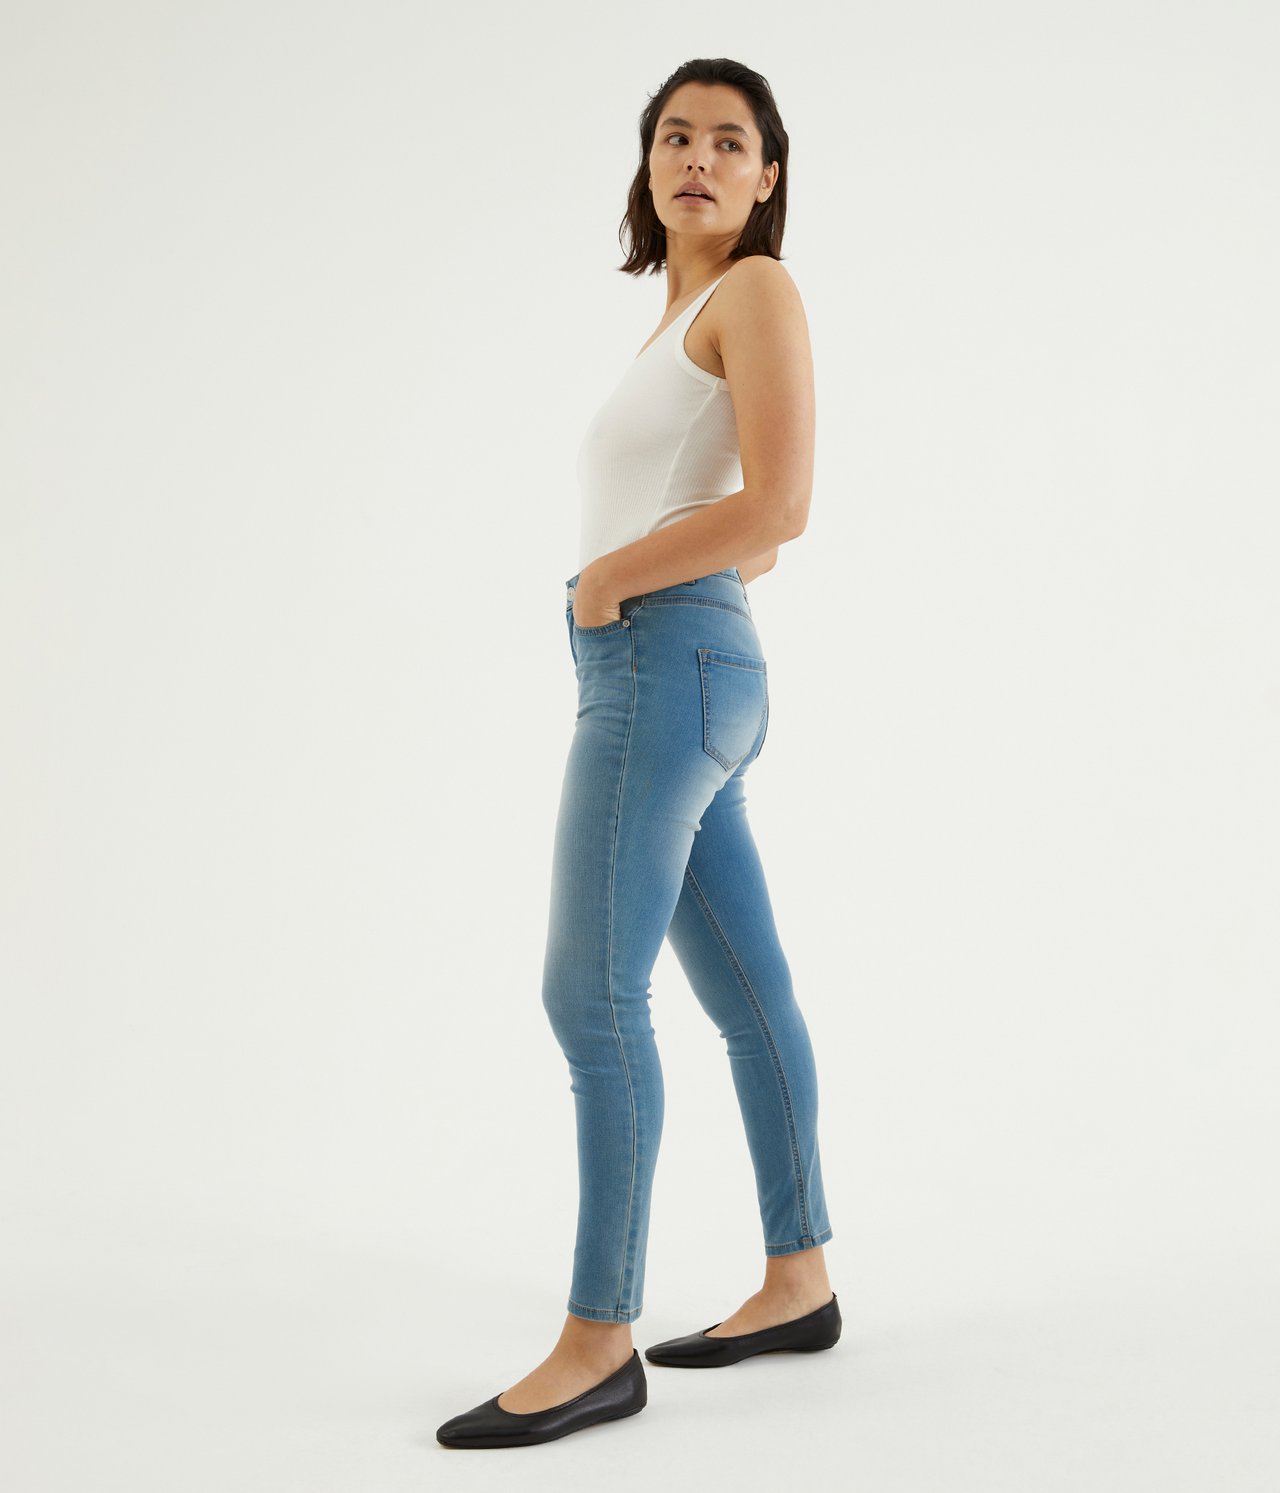 Super slim jeans short leg - Denim - 4